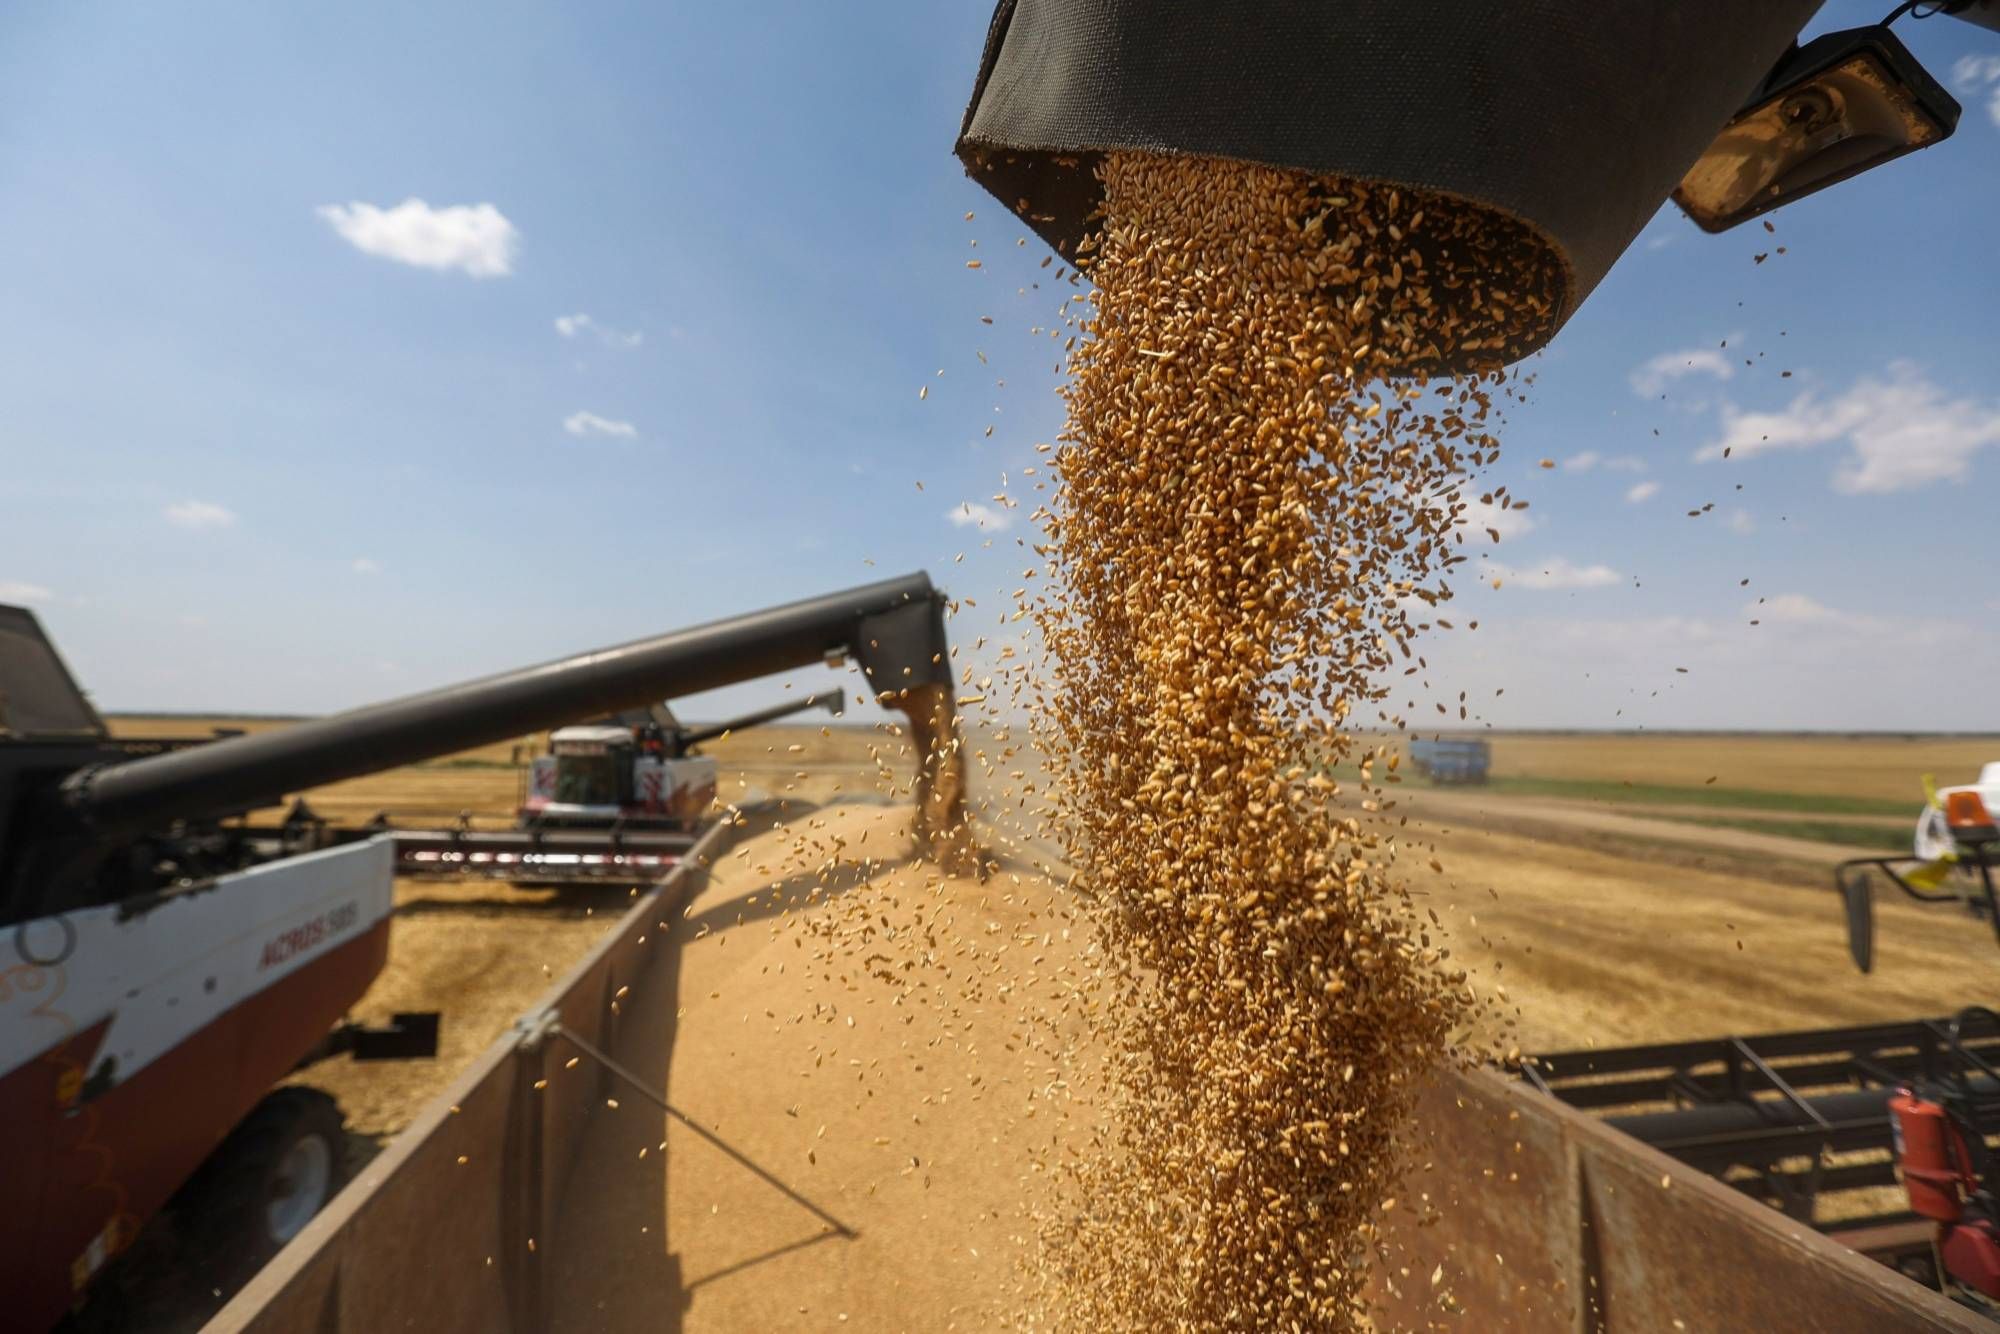 Ukrainian grain became one of Putin's goals